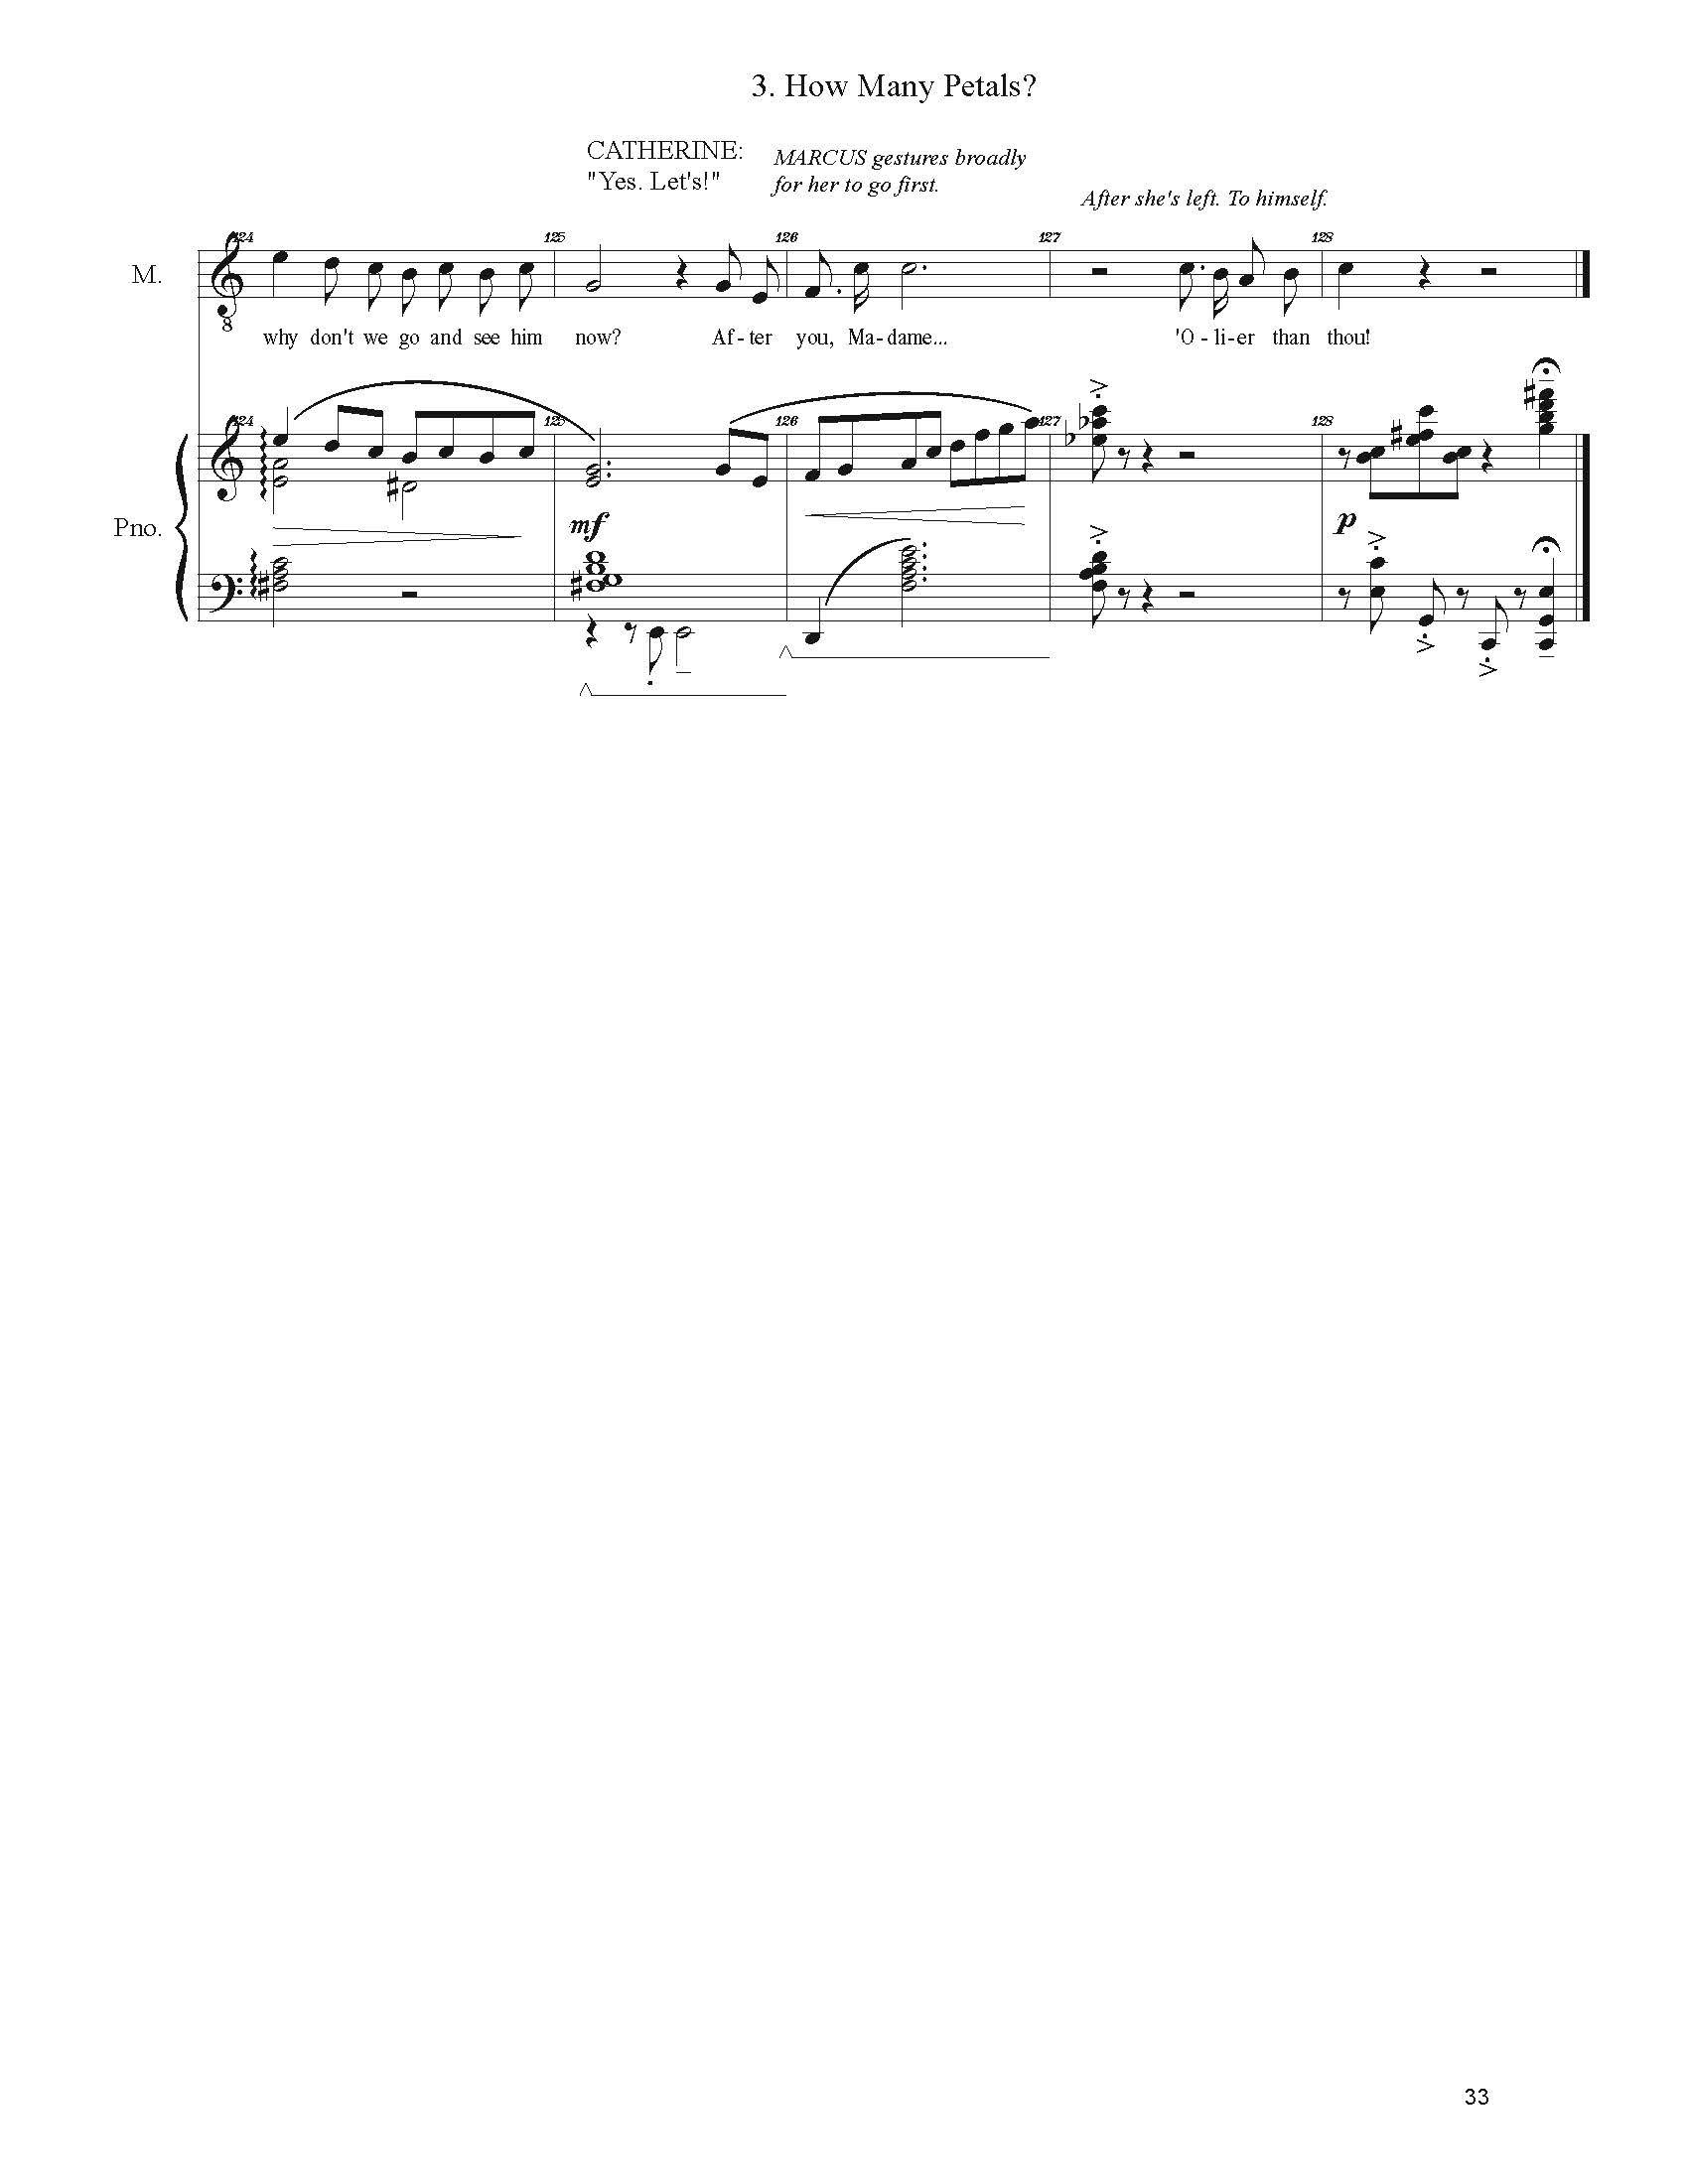 FULL PIANO VOCAL SCORE DRAFT 1 - Score_Page_033.jpg